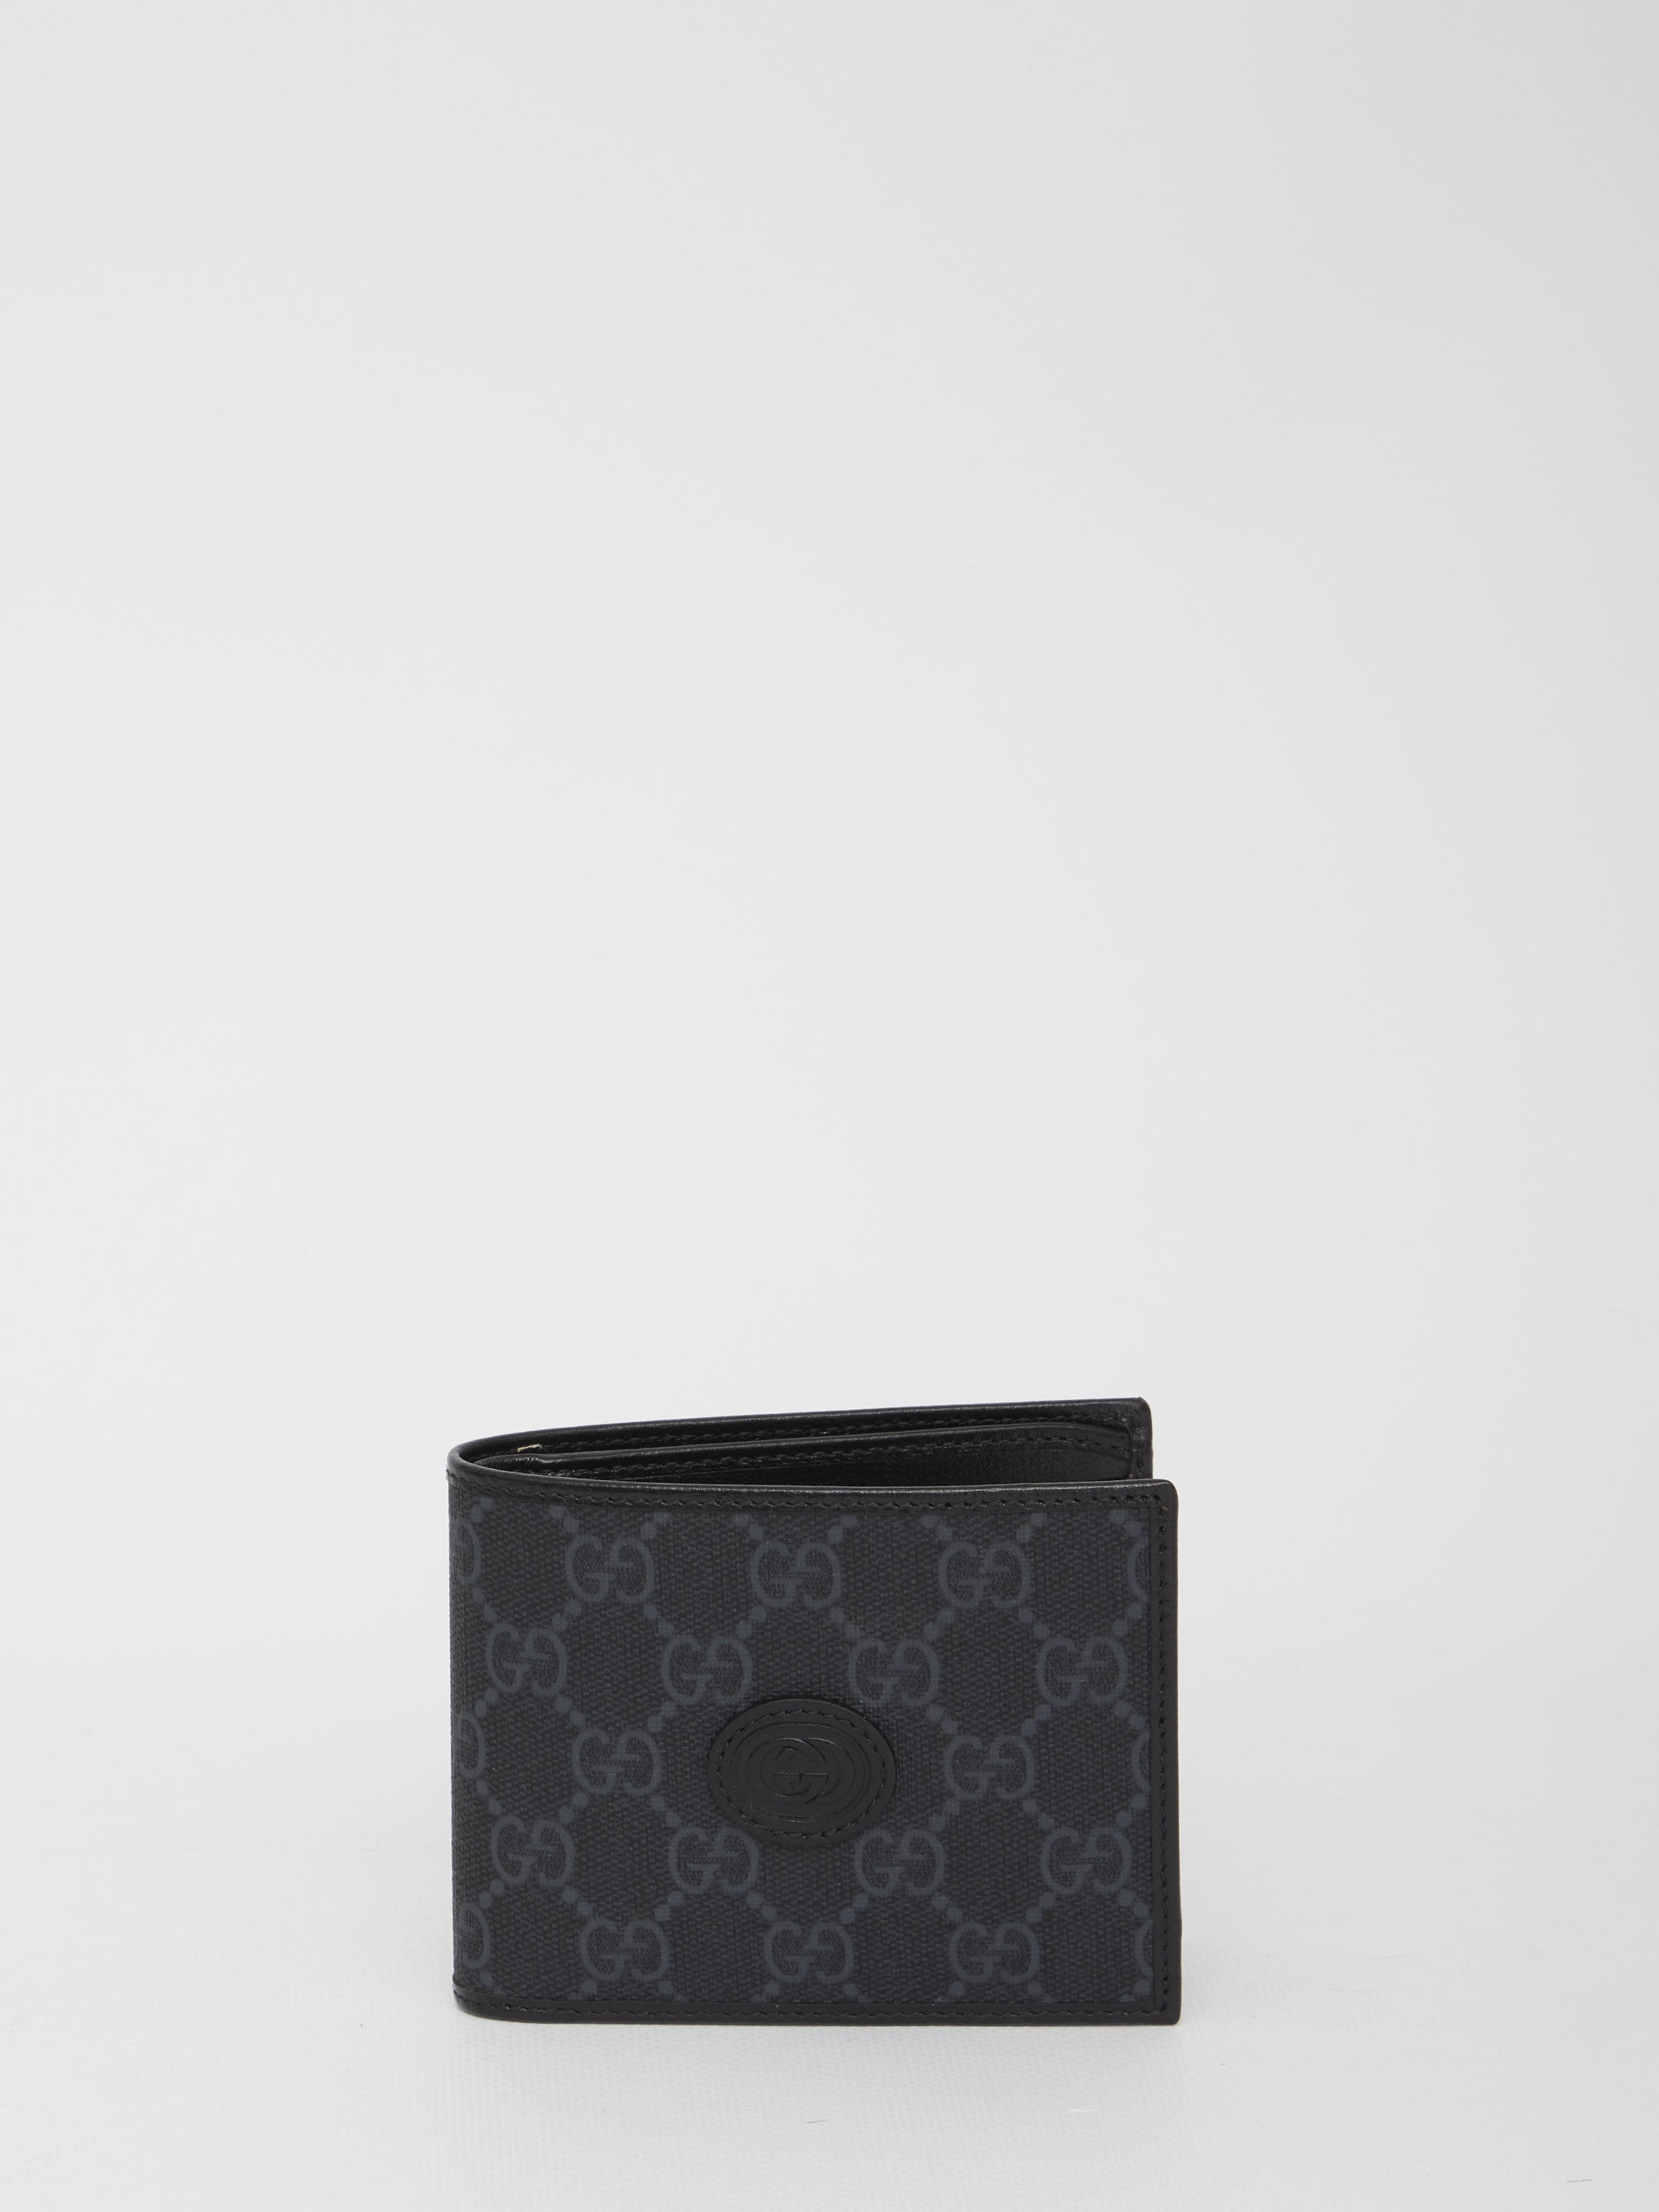 GG fabric wallet